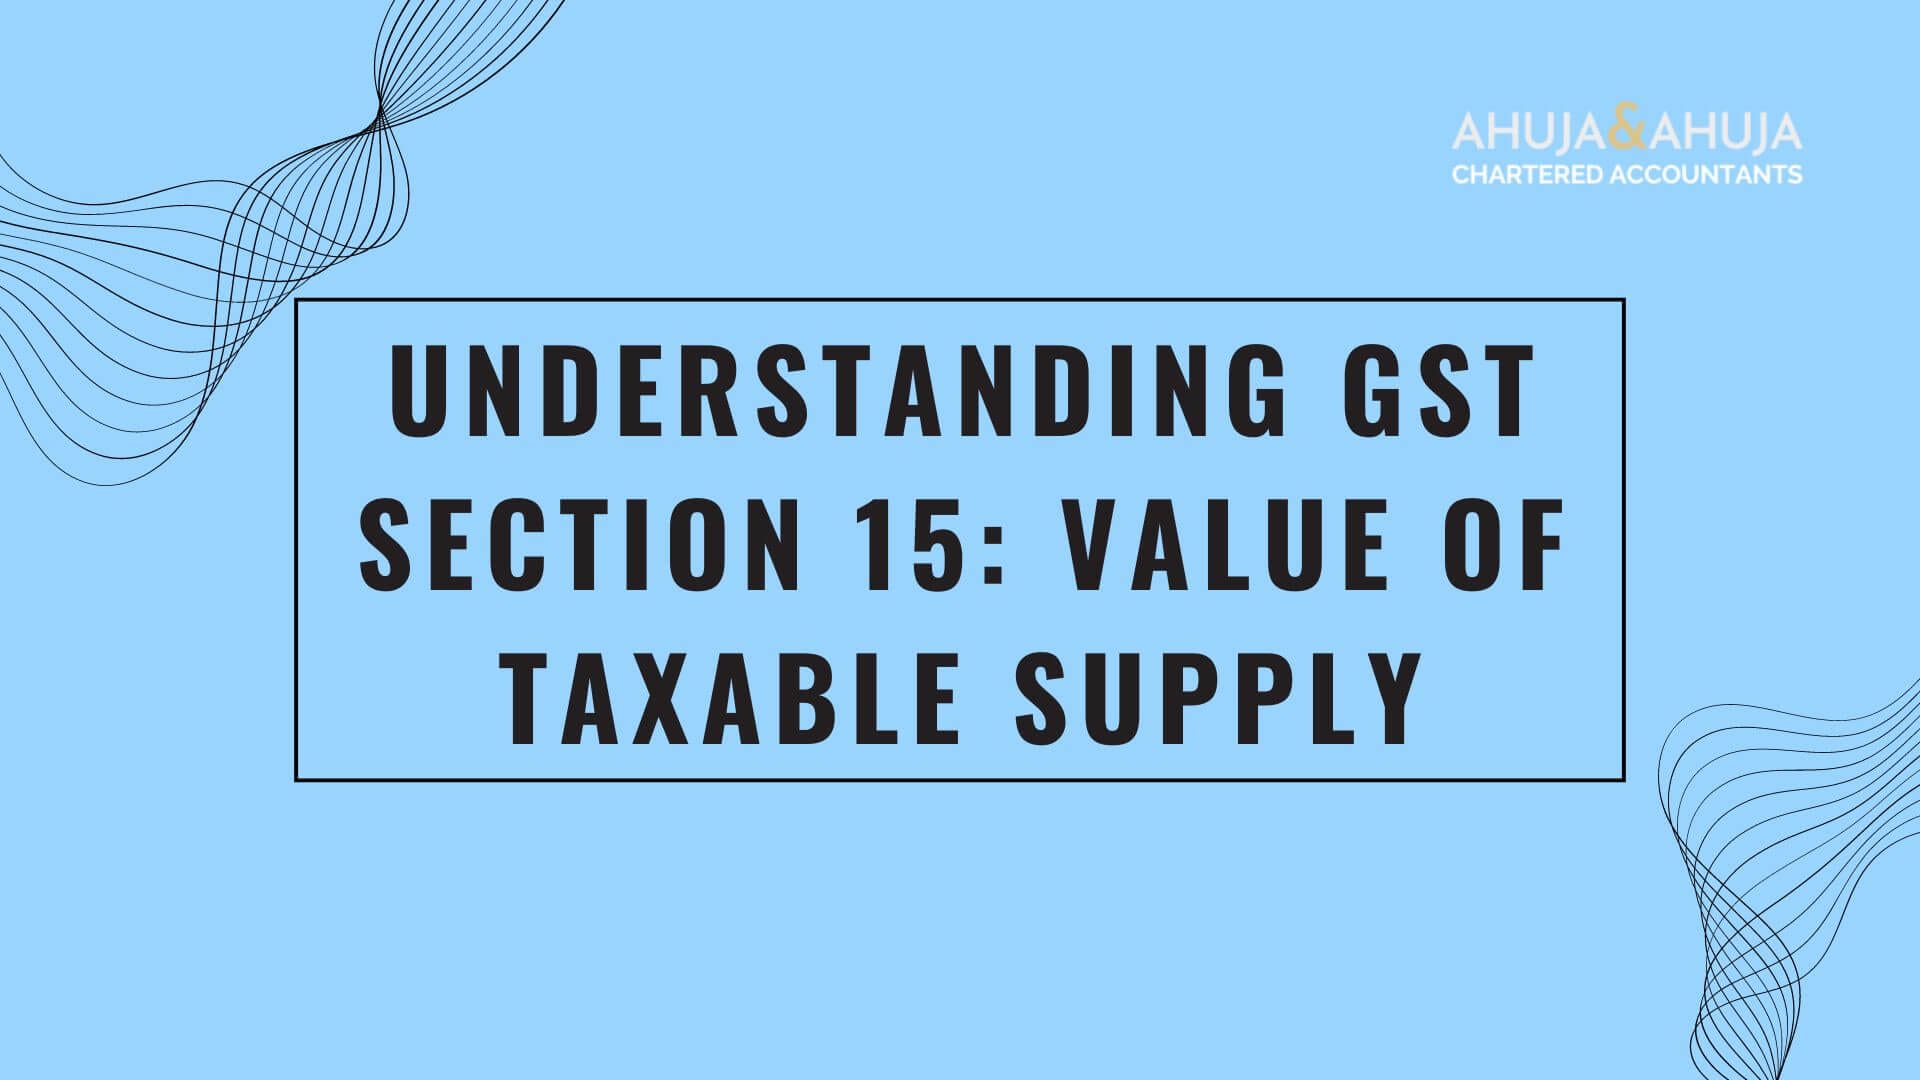 Understanding GST Section 15